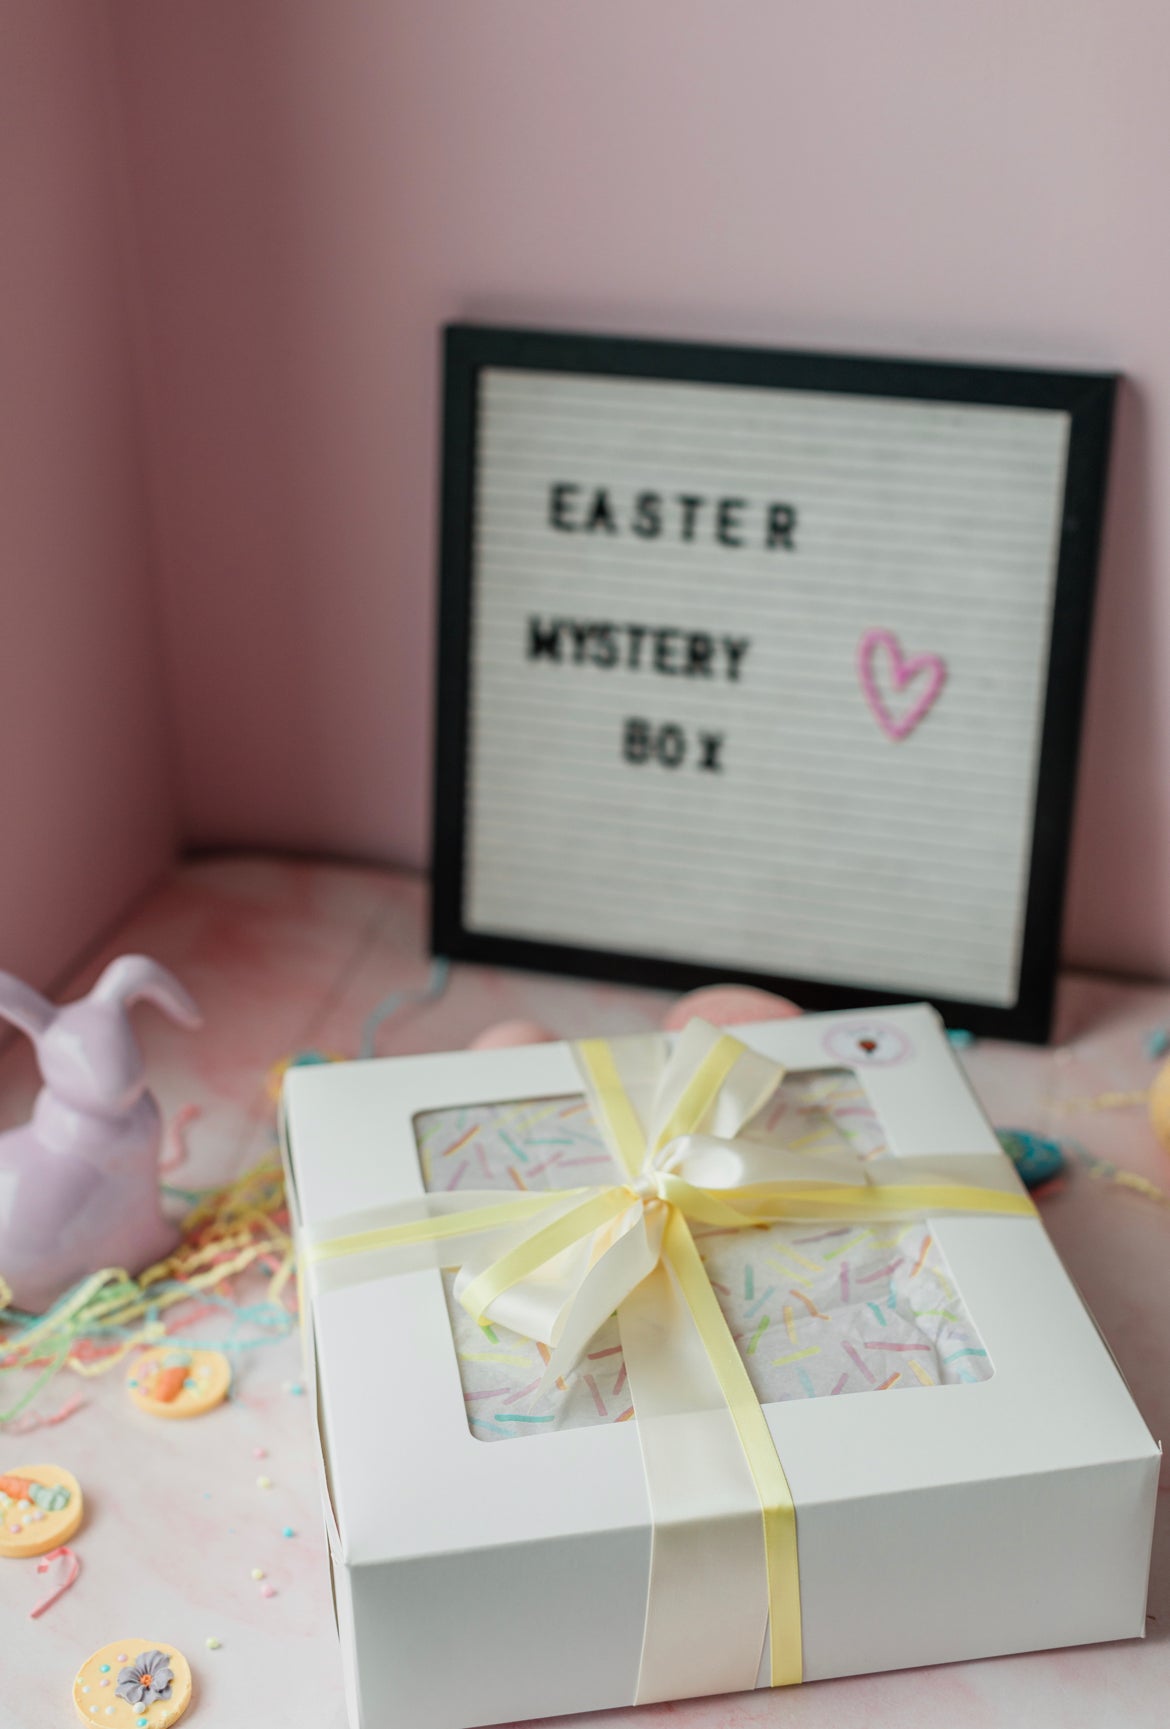 Easter Mystery Treat Box